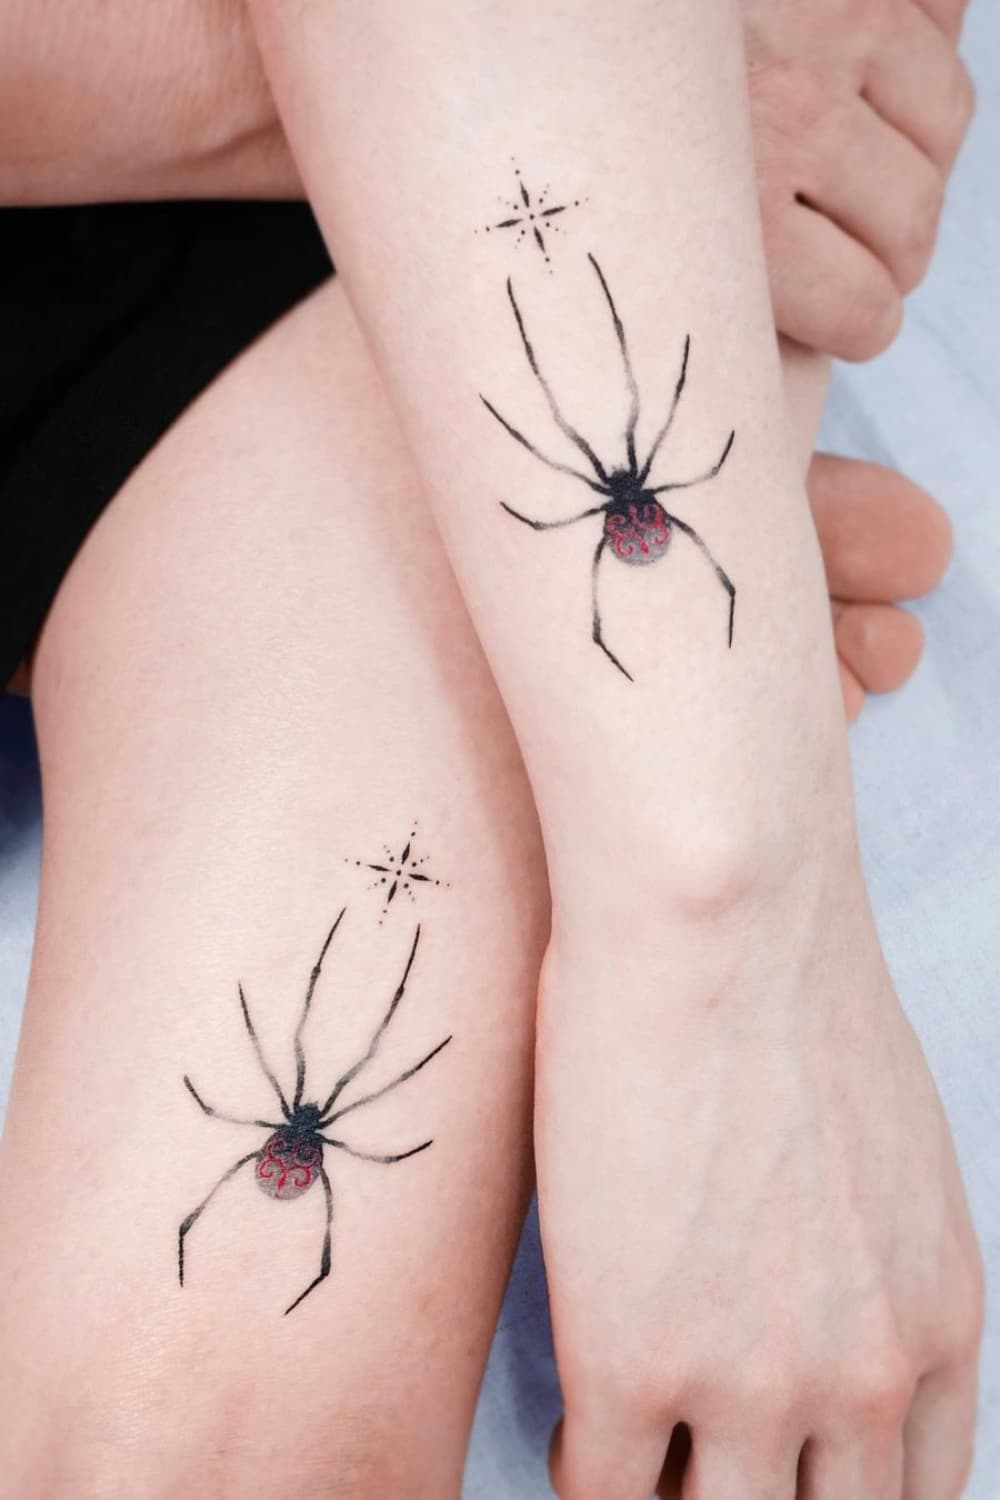 Spider matching tattoo